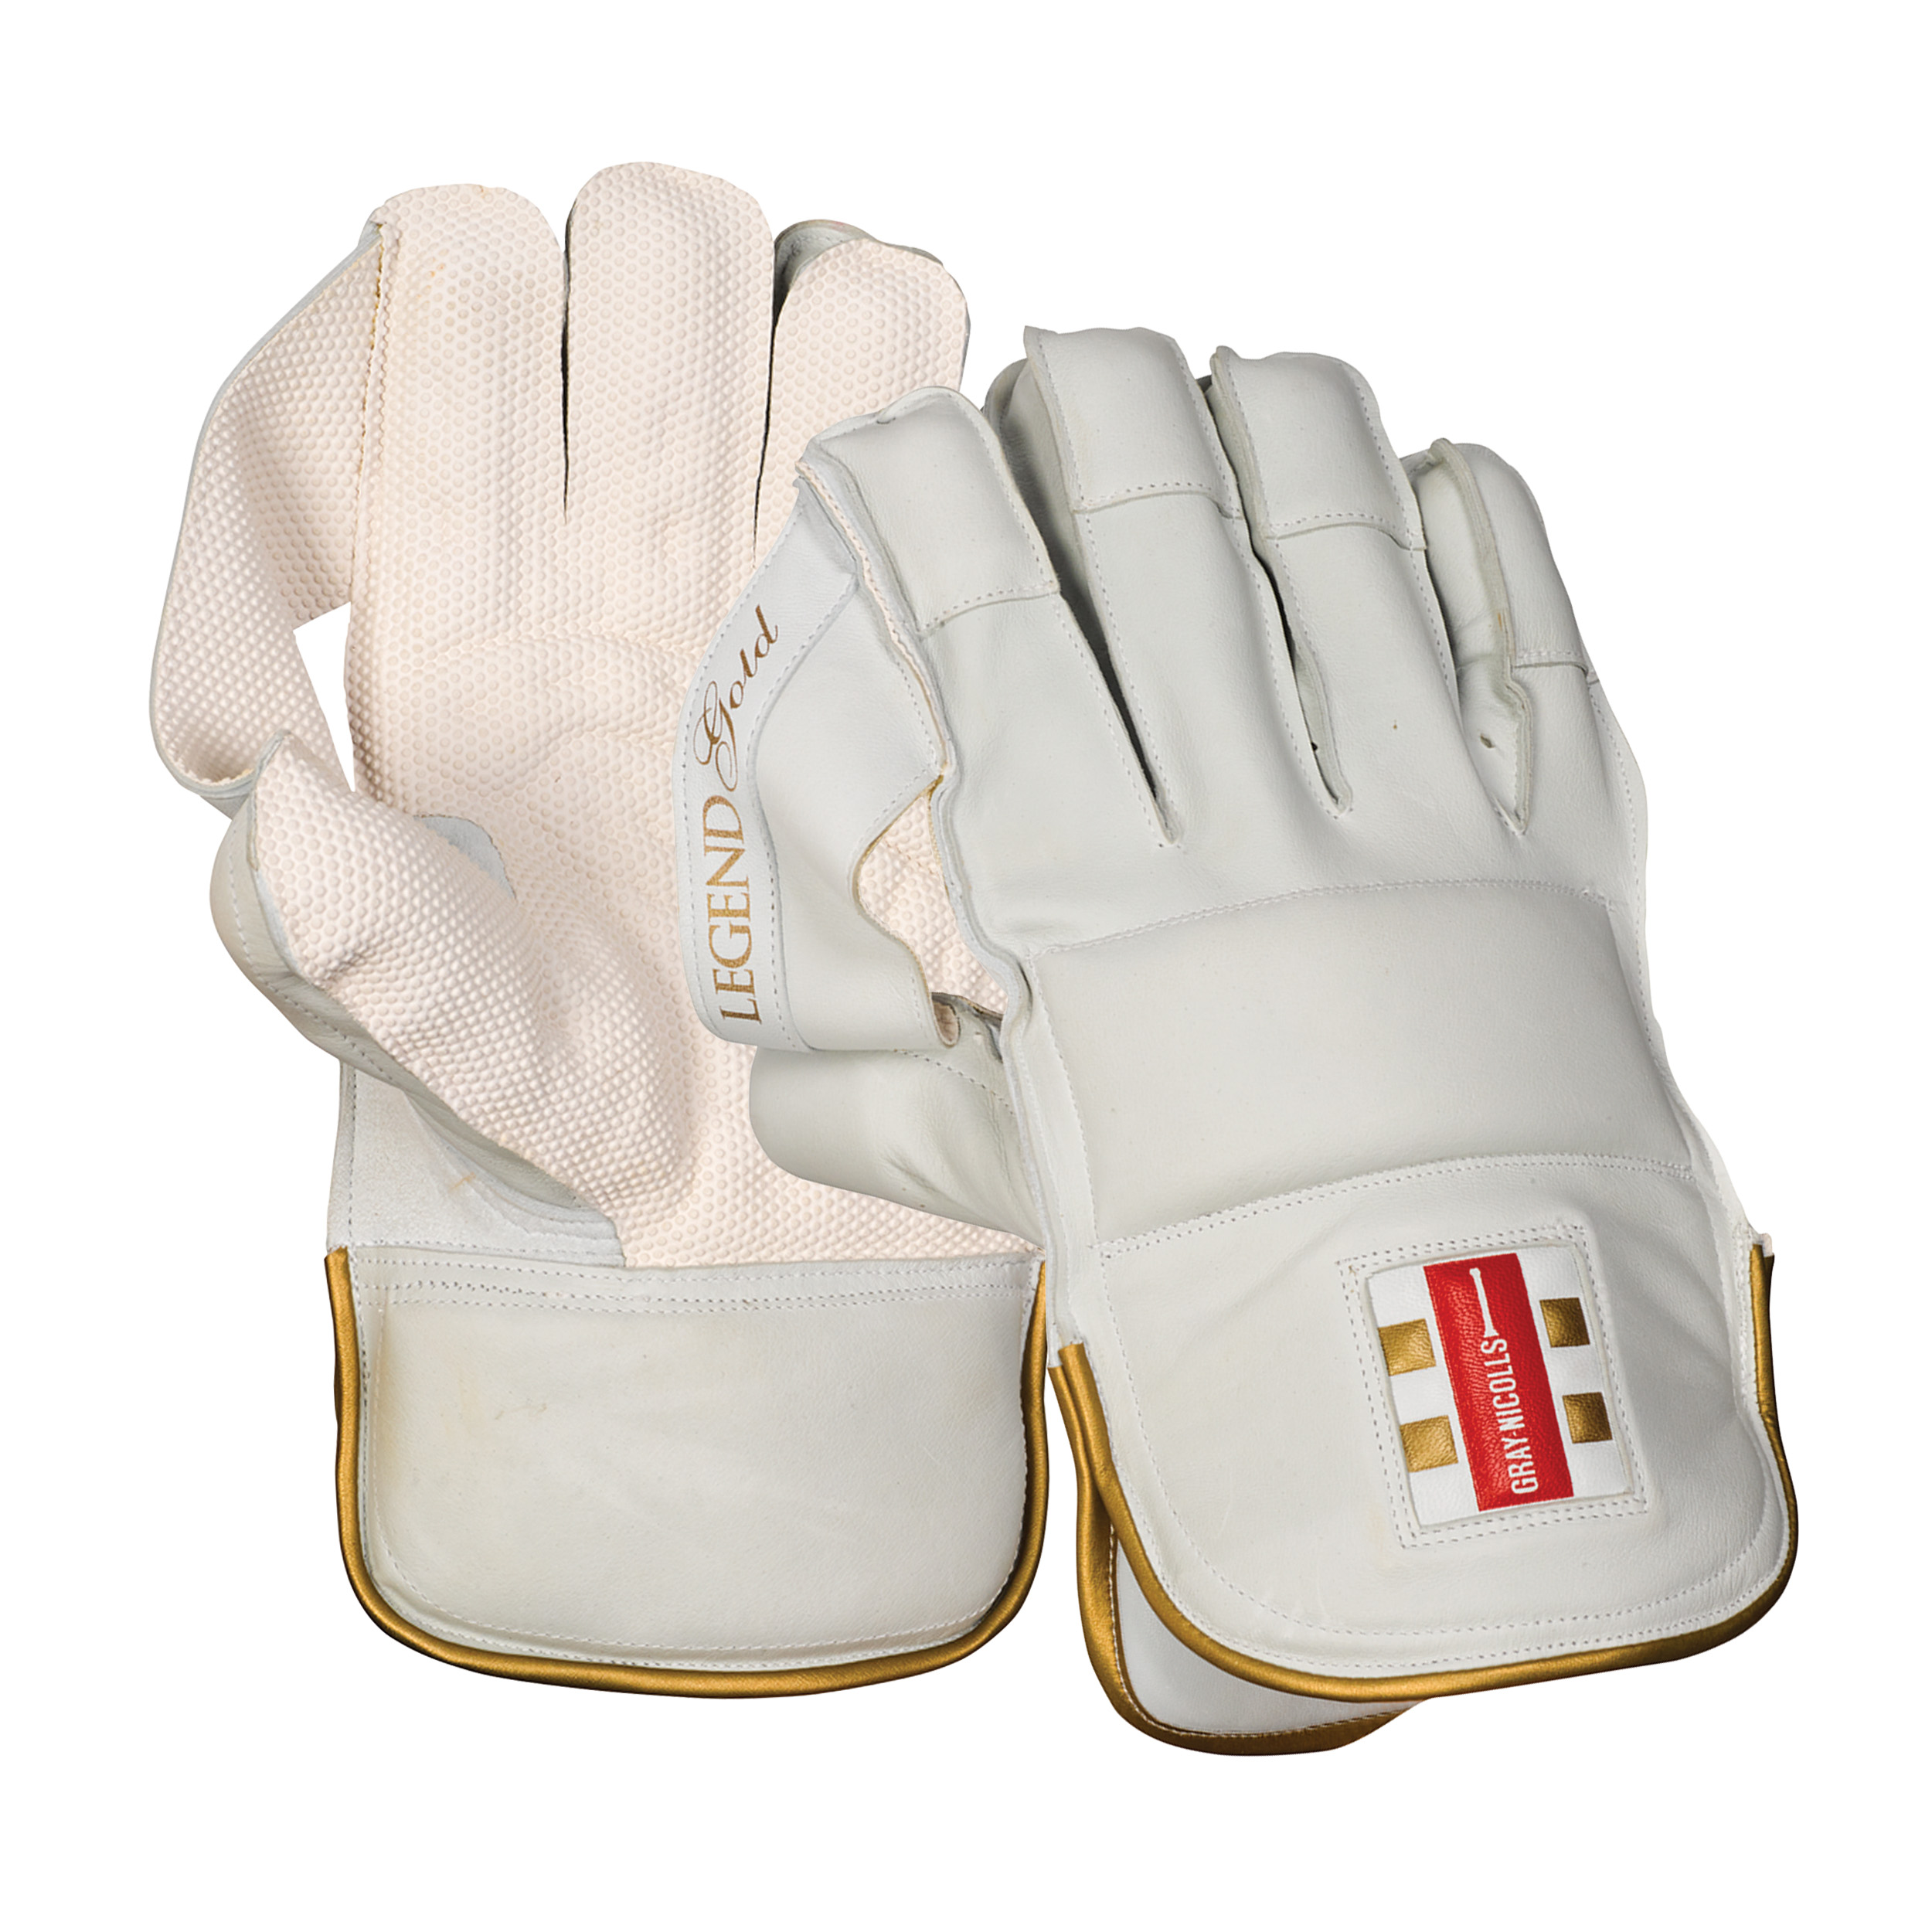 Gray Nicolls Legend Gold Wicketkeeping Gloves 21515